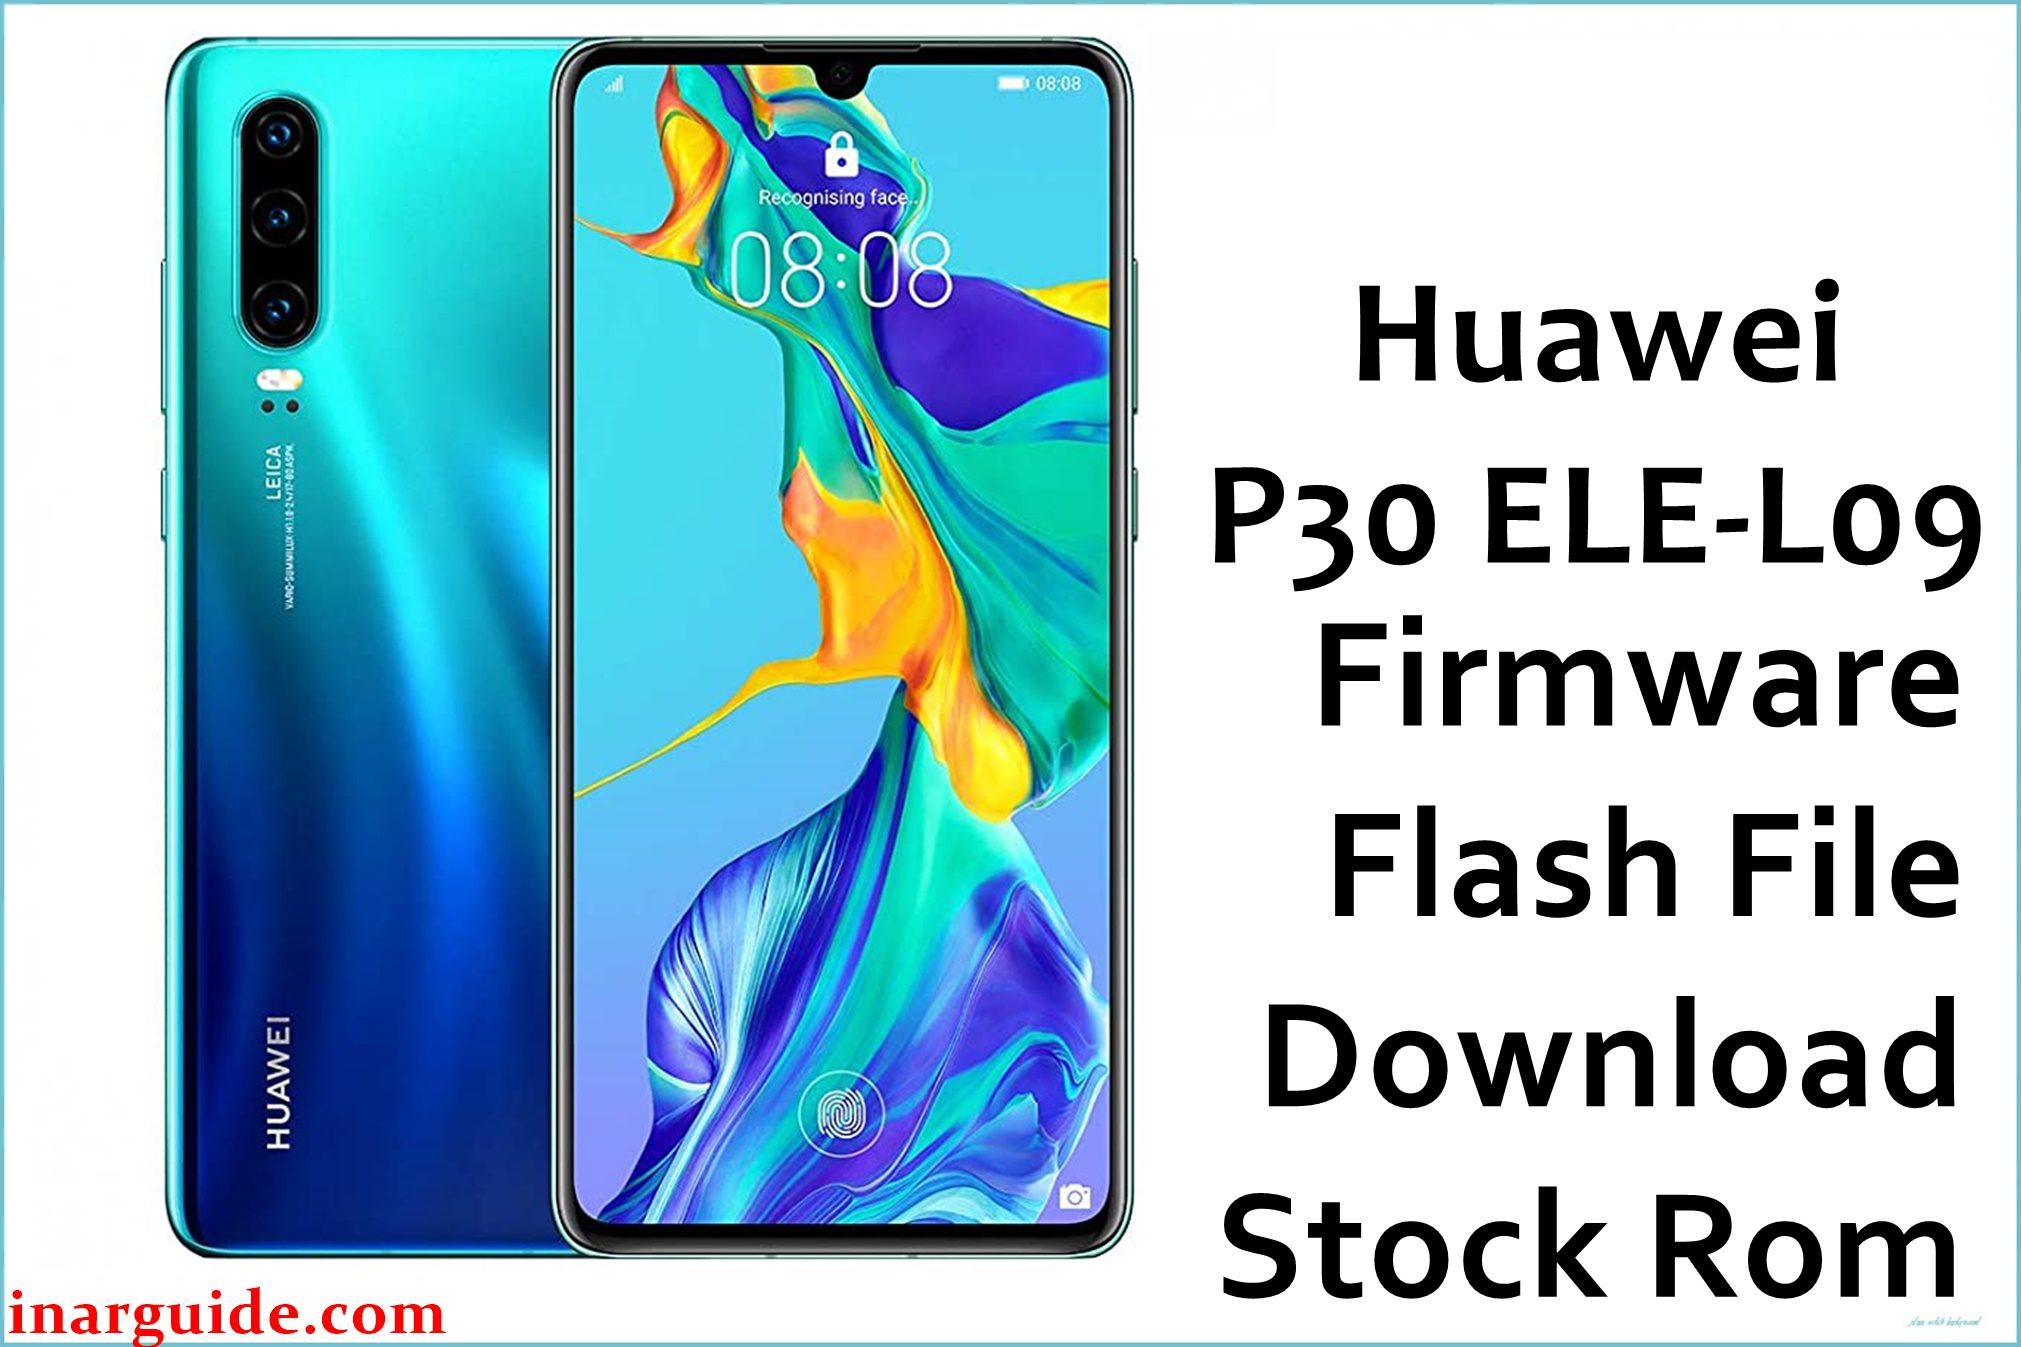 Huawei P30 ELE L09